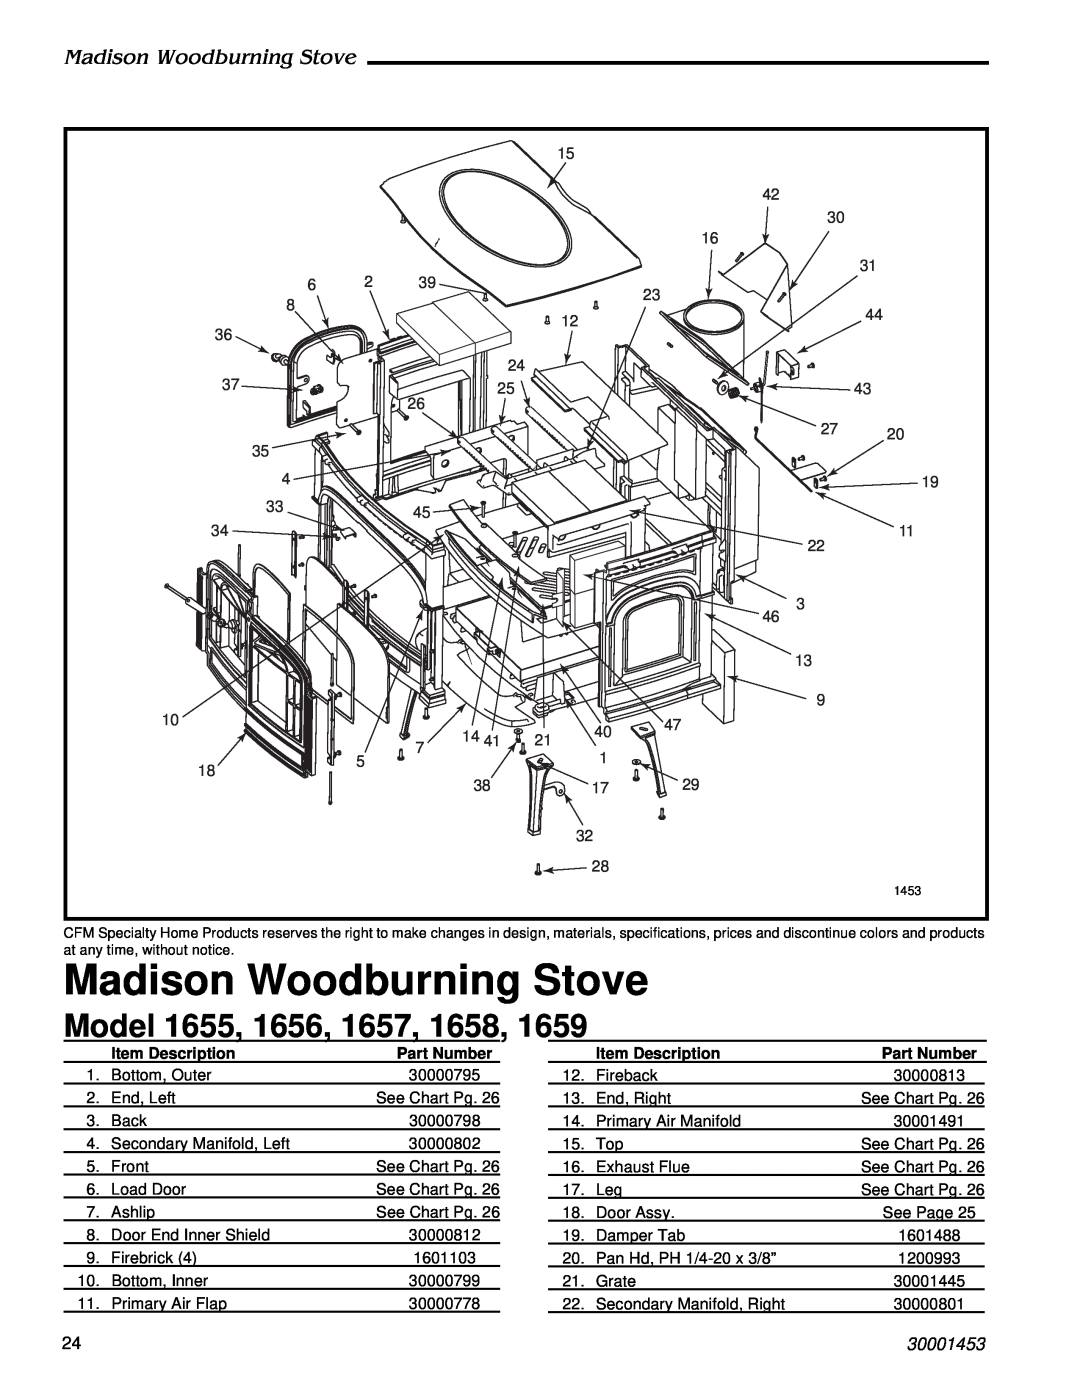 Vermont Casting 410 Madison Woodburning Stove, Model 1655, 30001453, Item Description, Part Number 